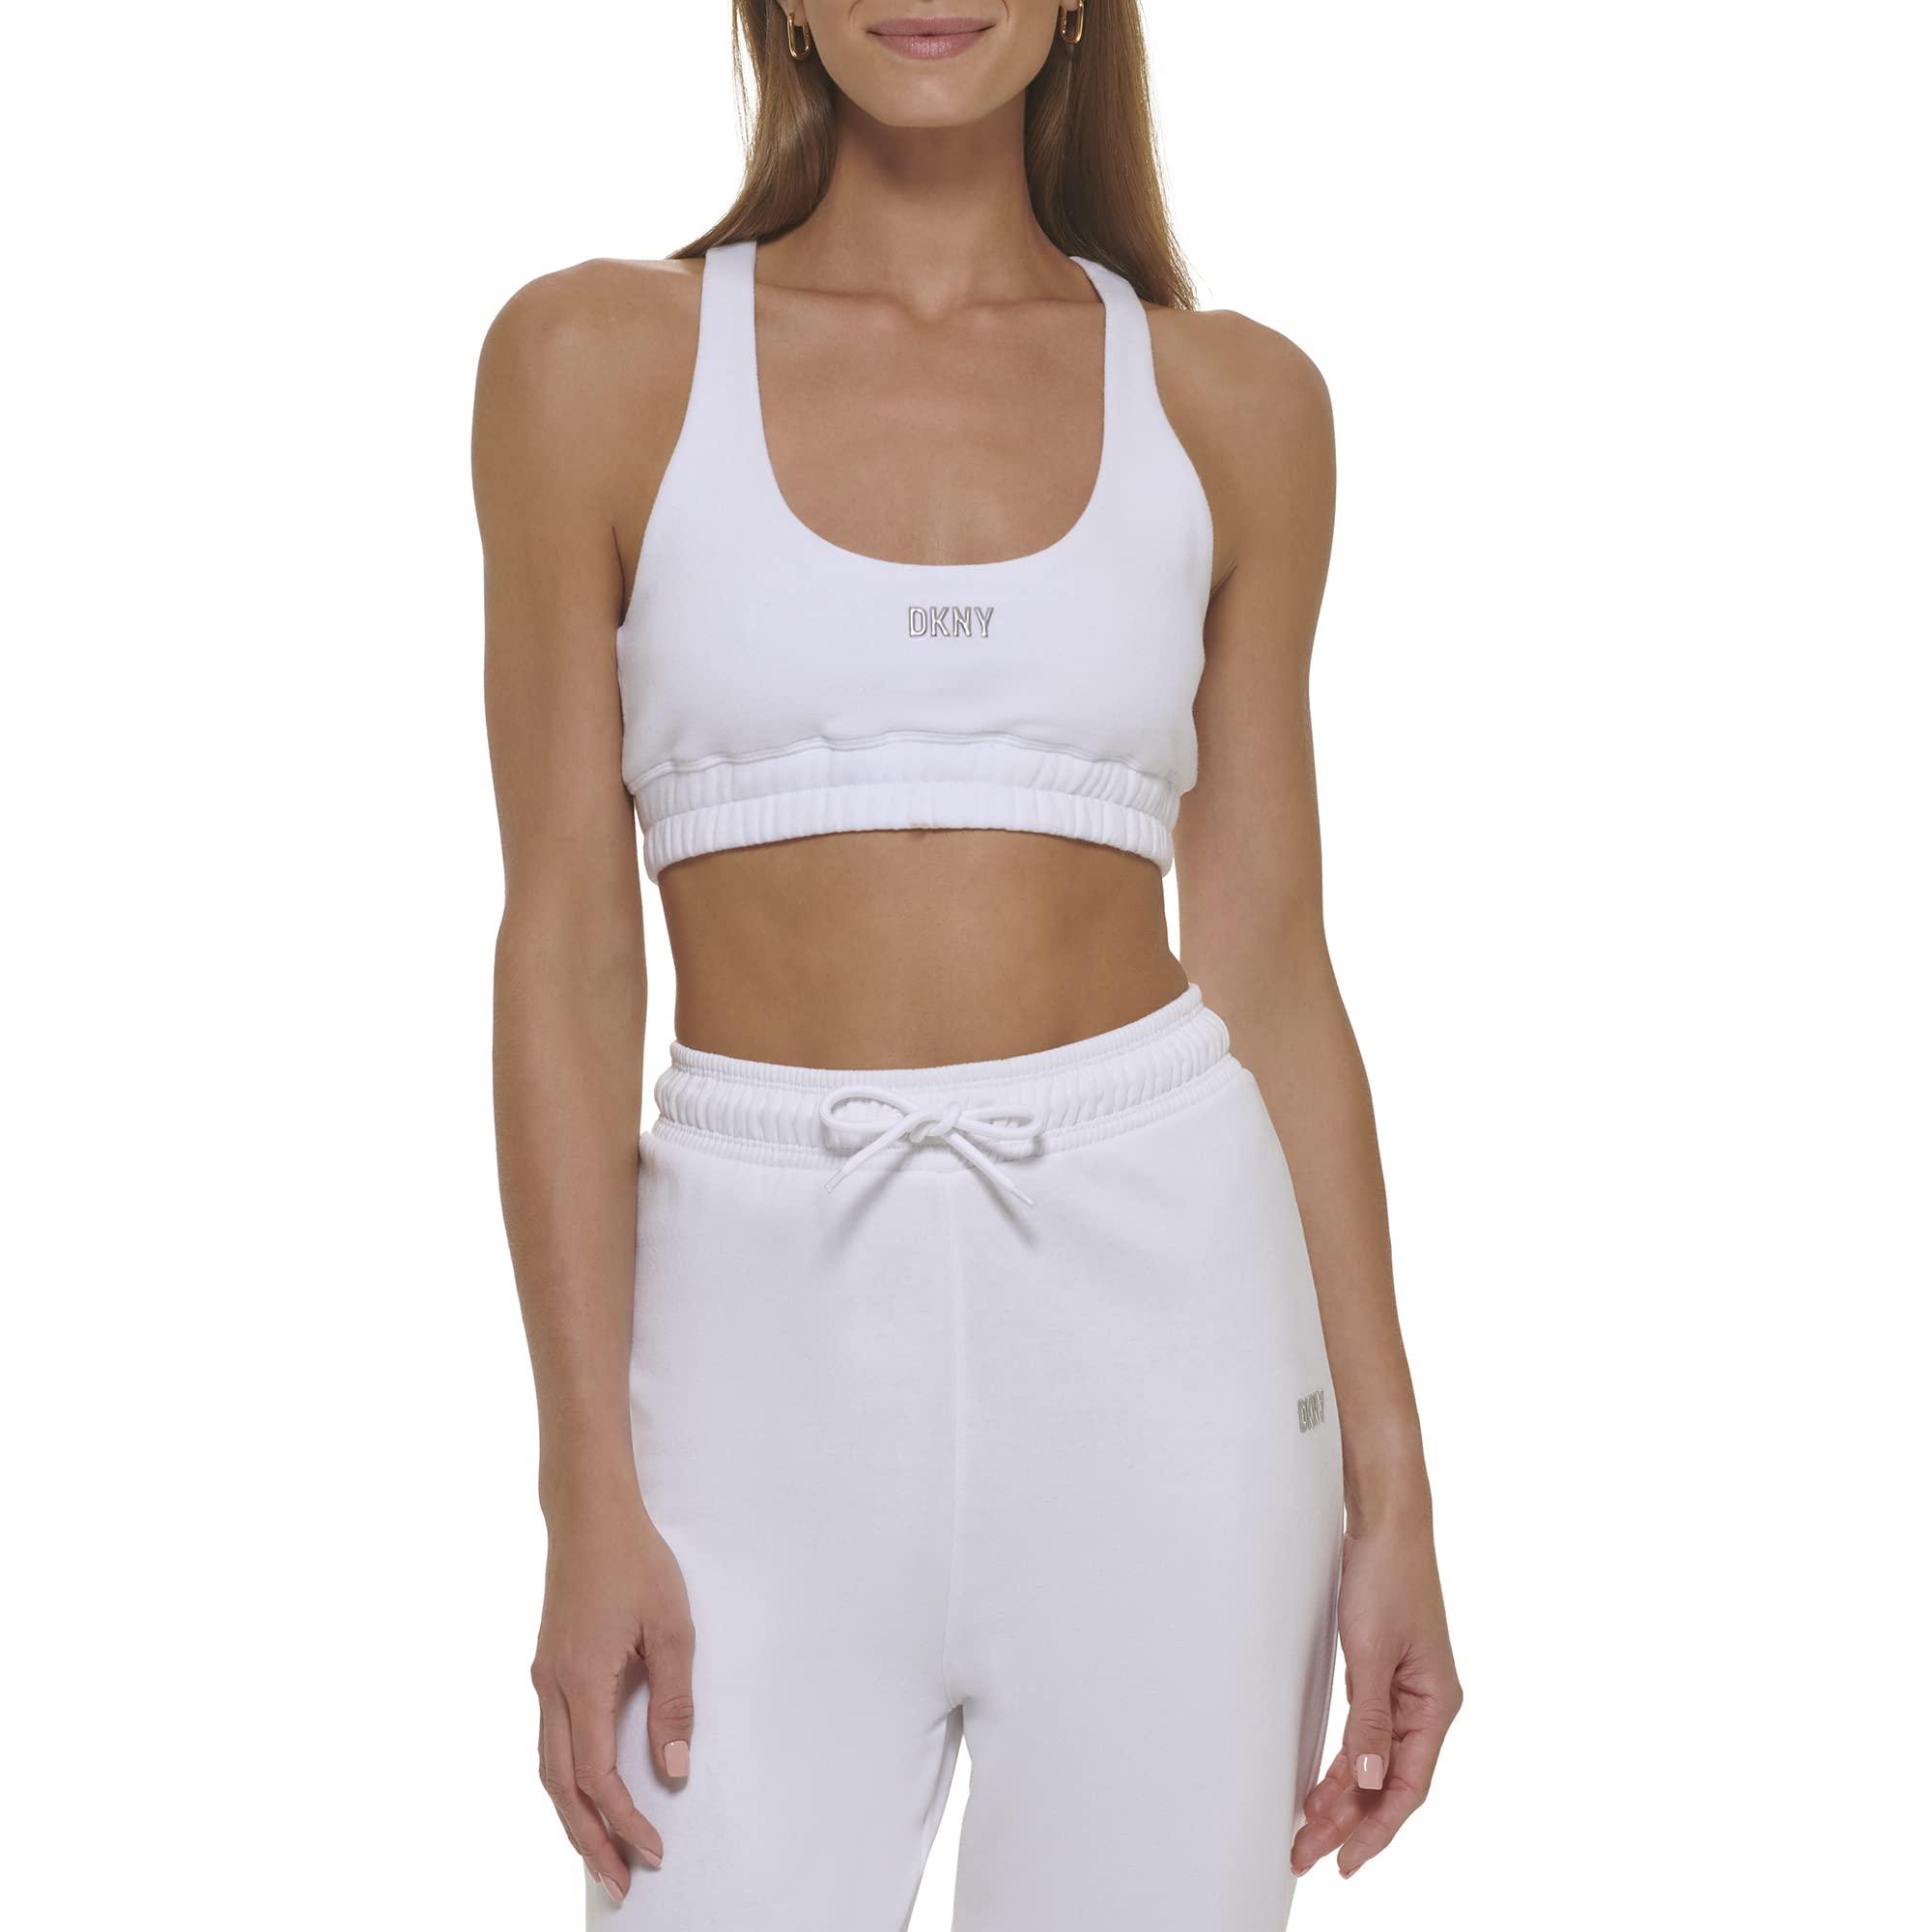 DKNY Sport Performance Support Yoga Running Bra in White